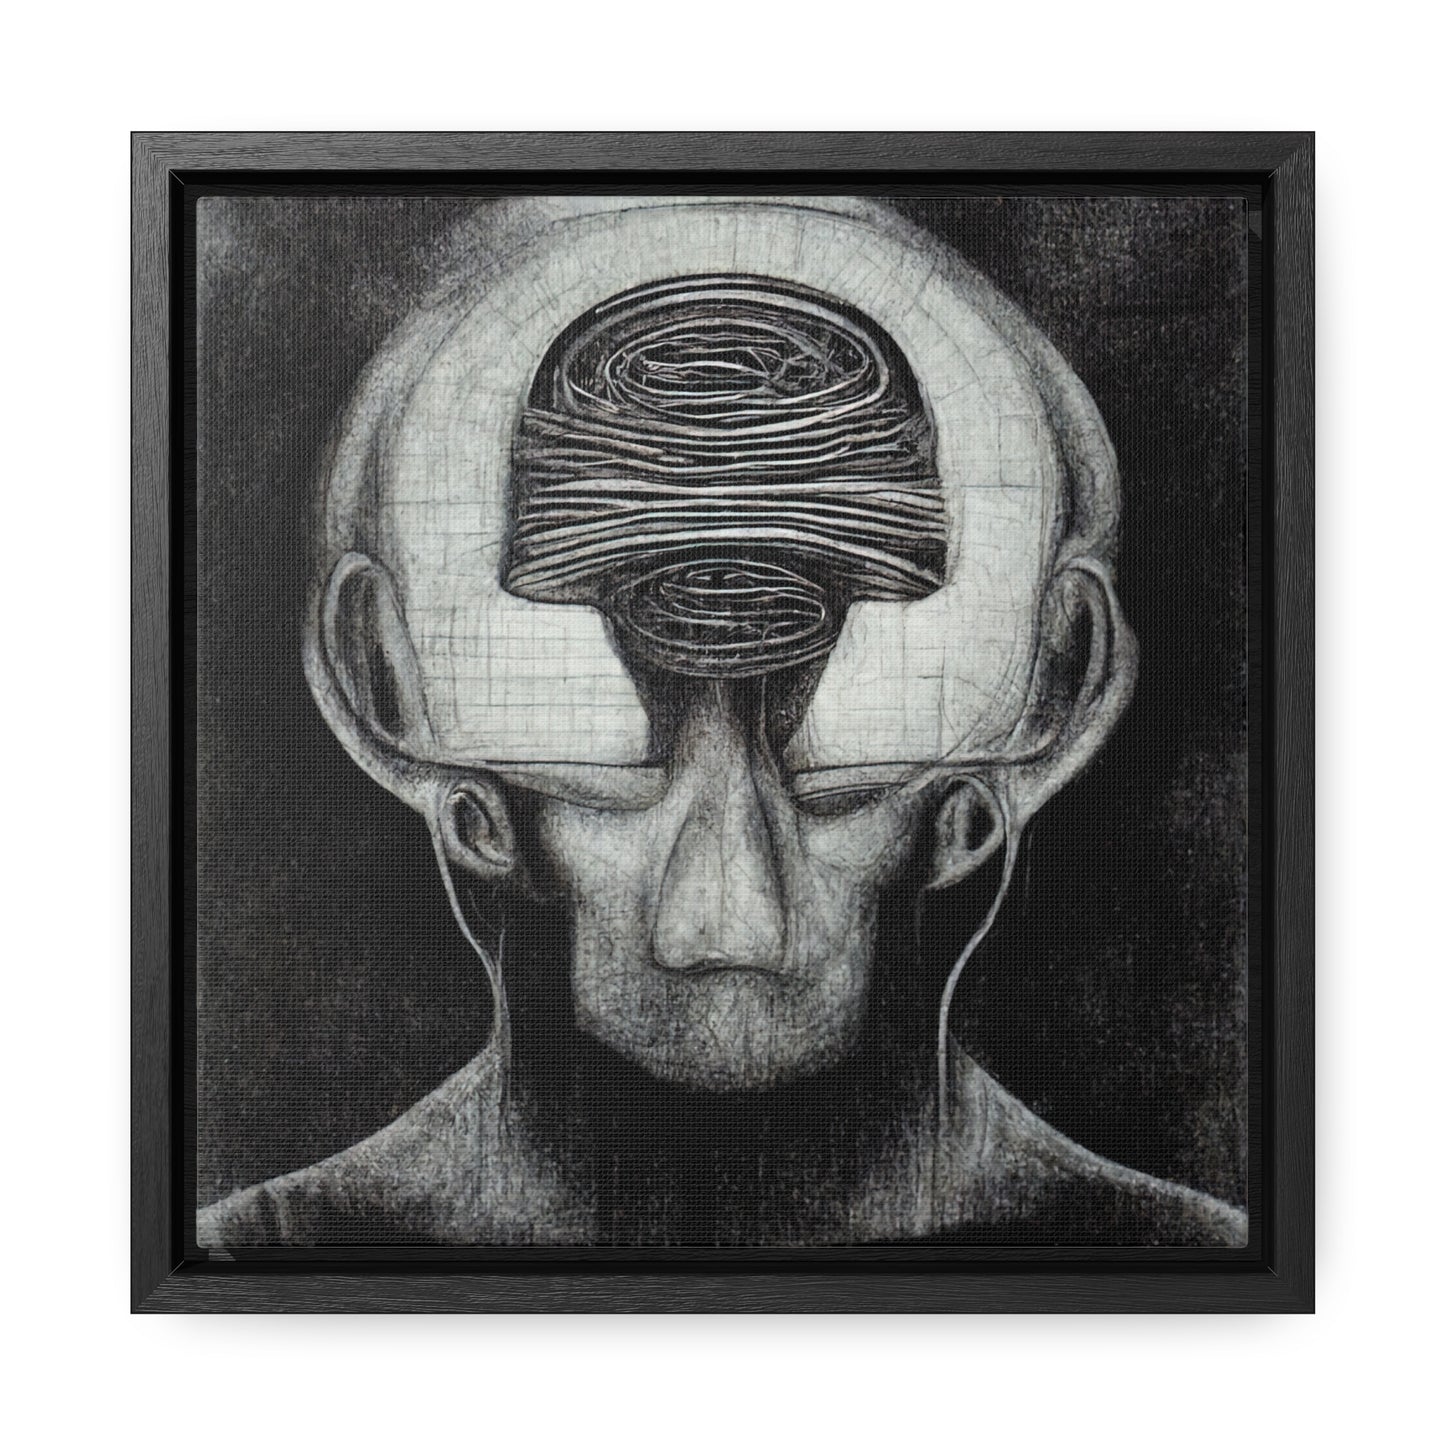 Brain 33, Valentinii, Gallery Canvas Wraps, Square Frame